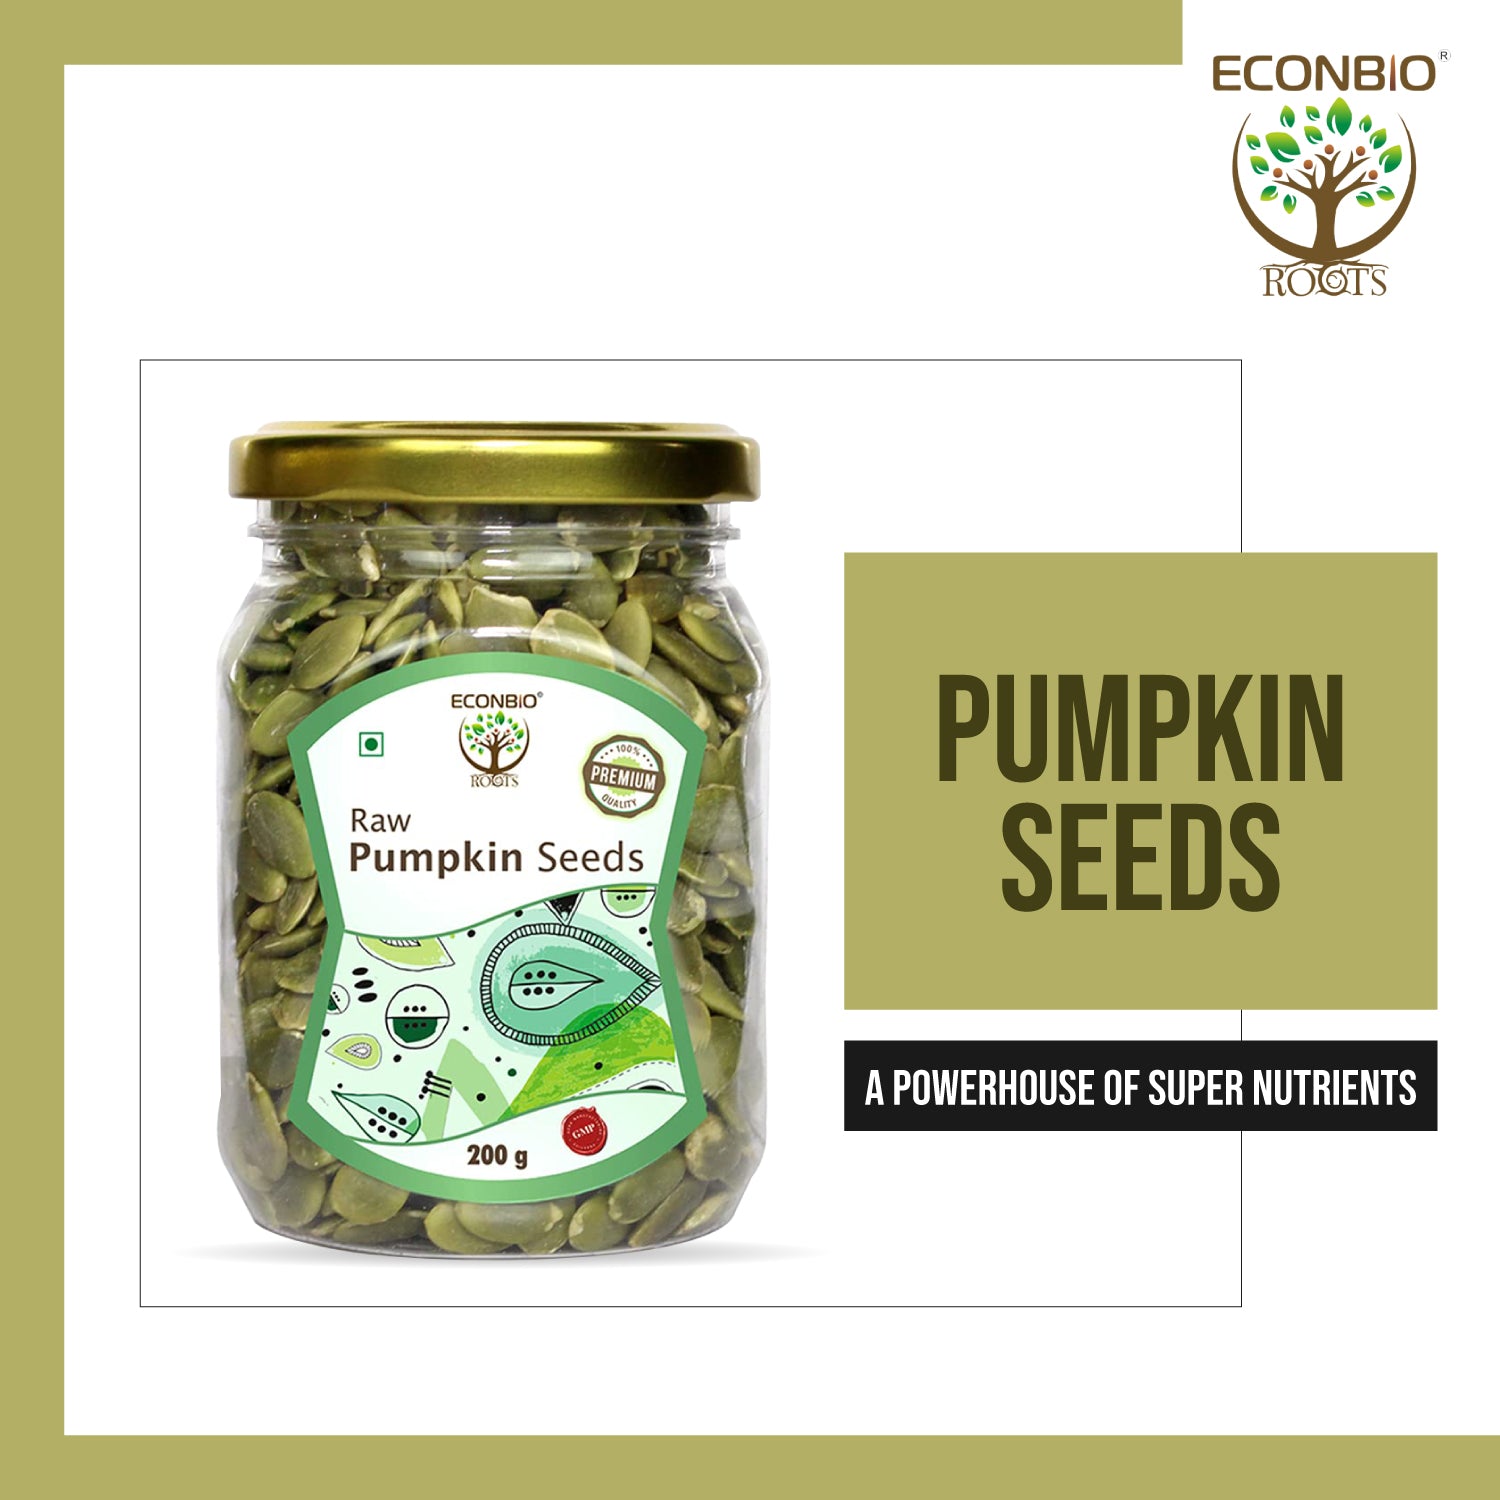 ECONBIO ROOTS 100% Natural Raw Pumpkins Seeds 200g